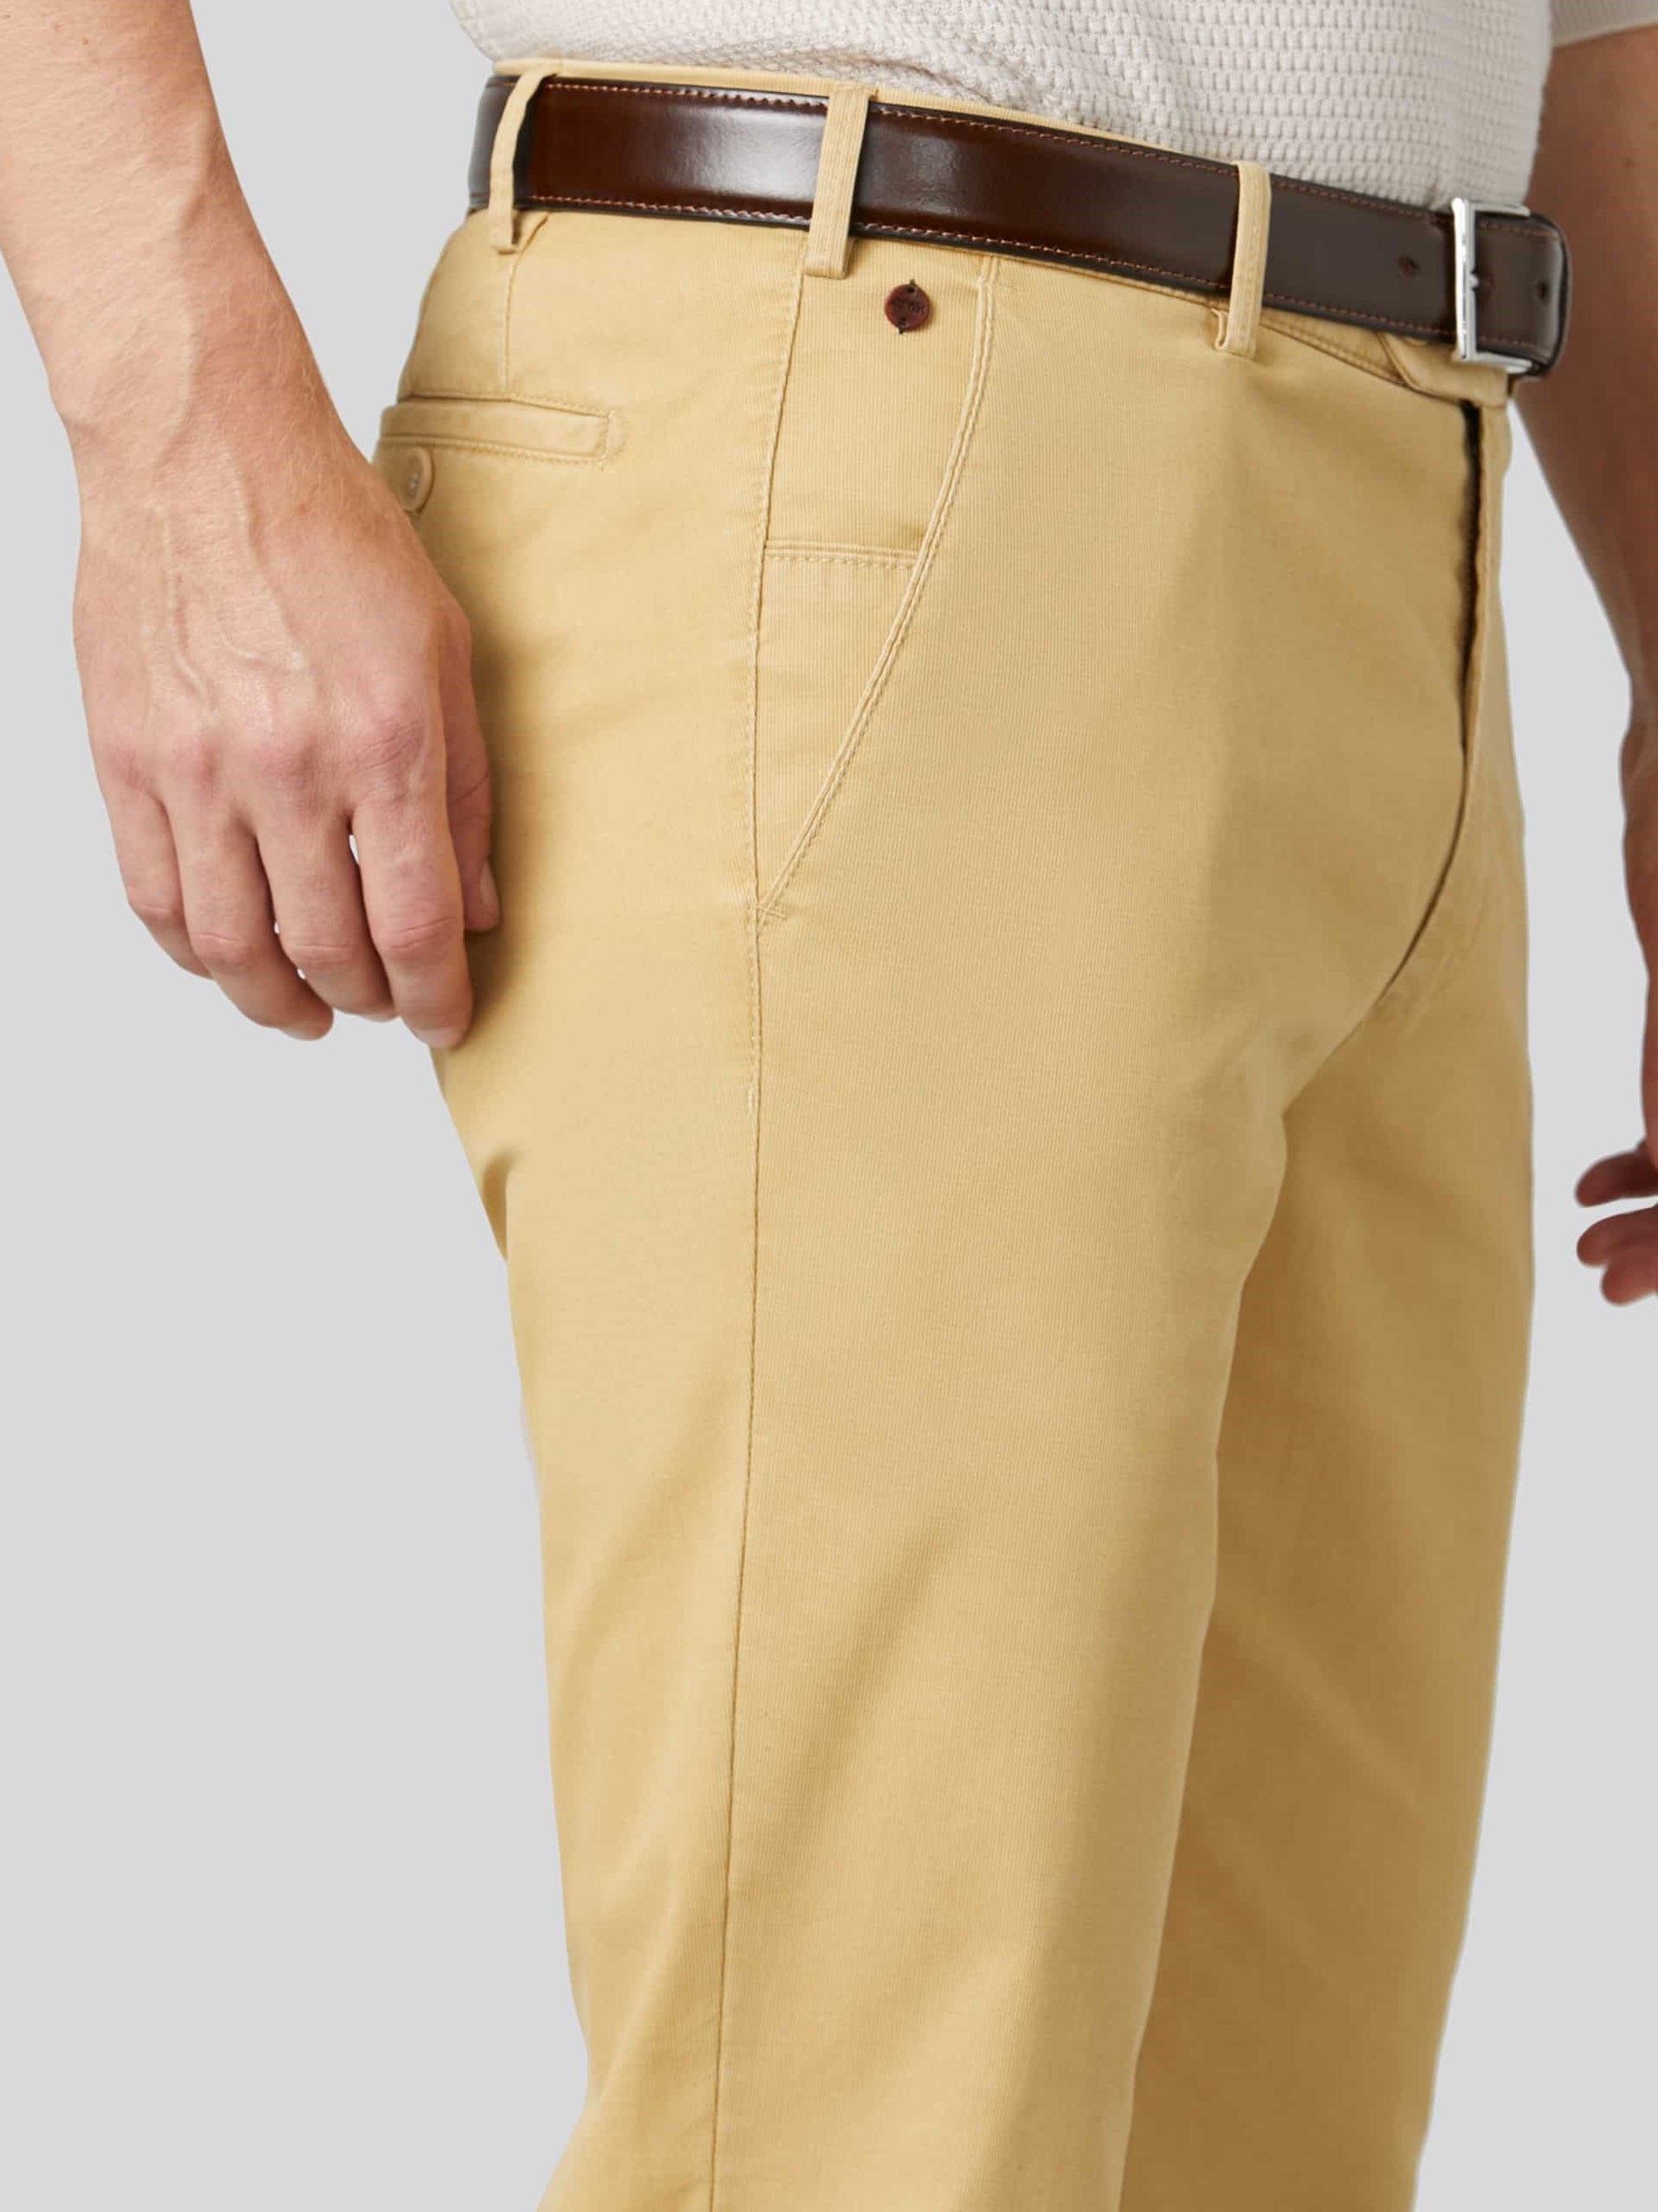 50% OFF - MEYER Trousers - New York Summer Cotelé Chinos - Mustard - Size: 32 REG